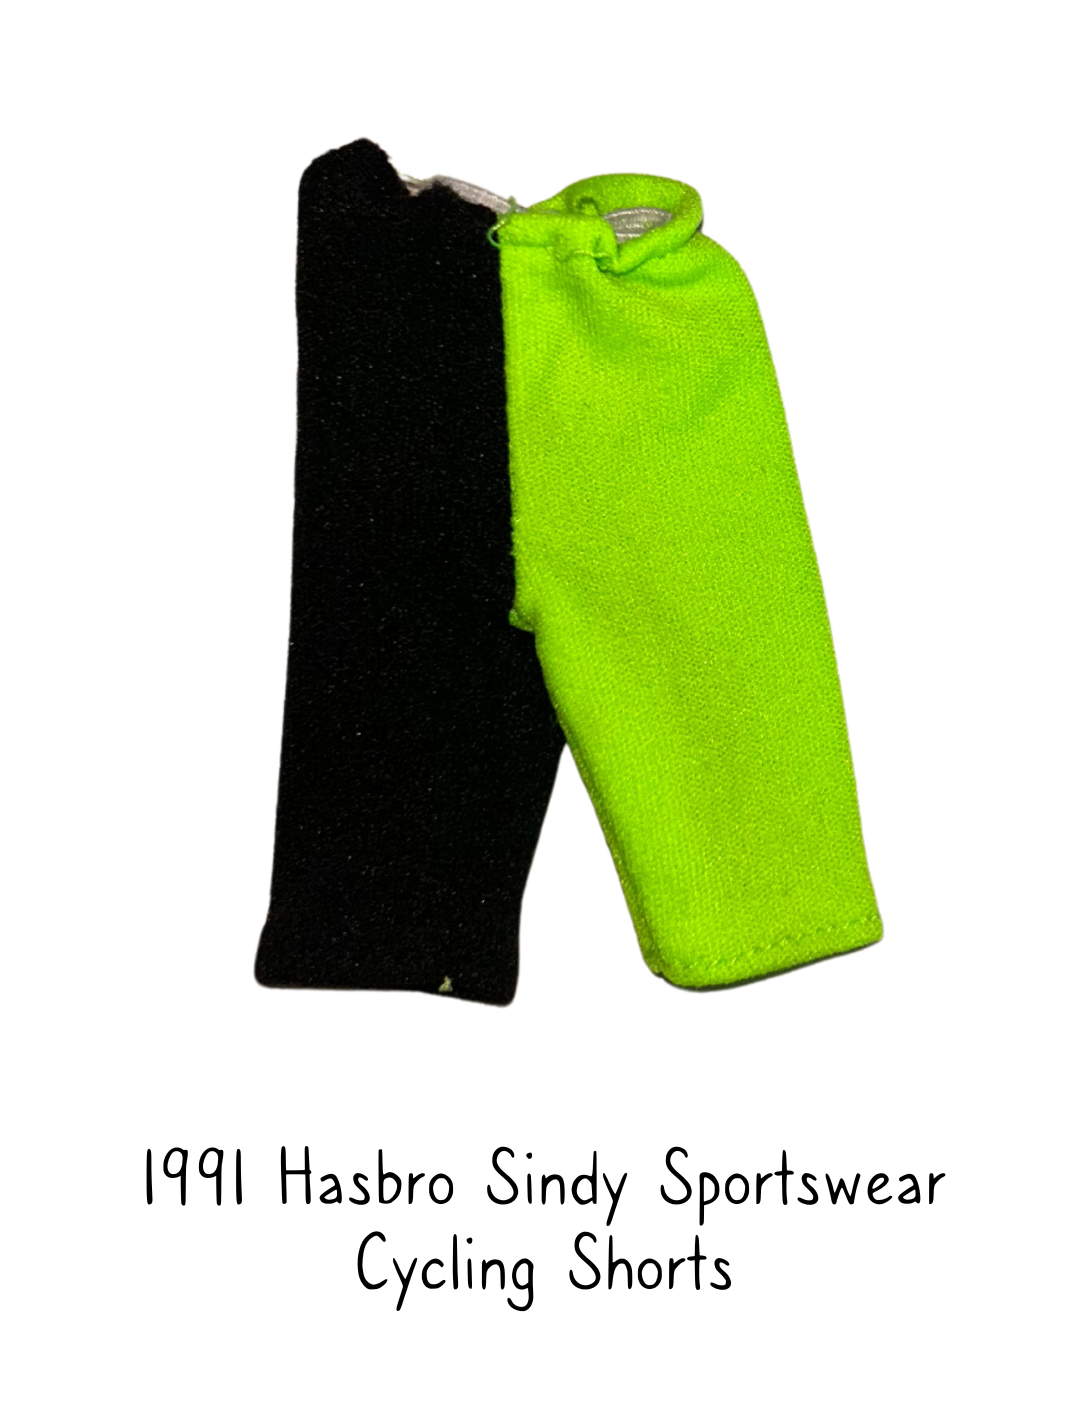 1991 Hasbro Sindy Sportswear Collection Cycling Shorts